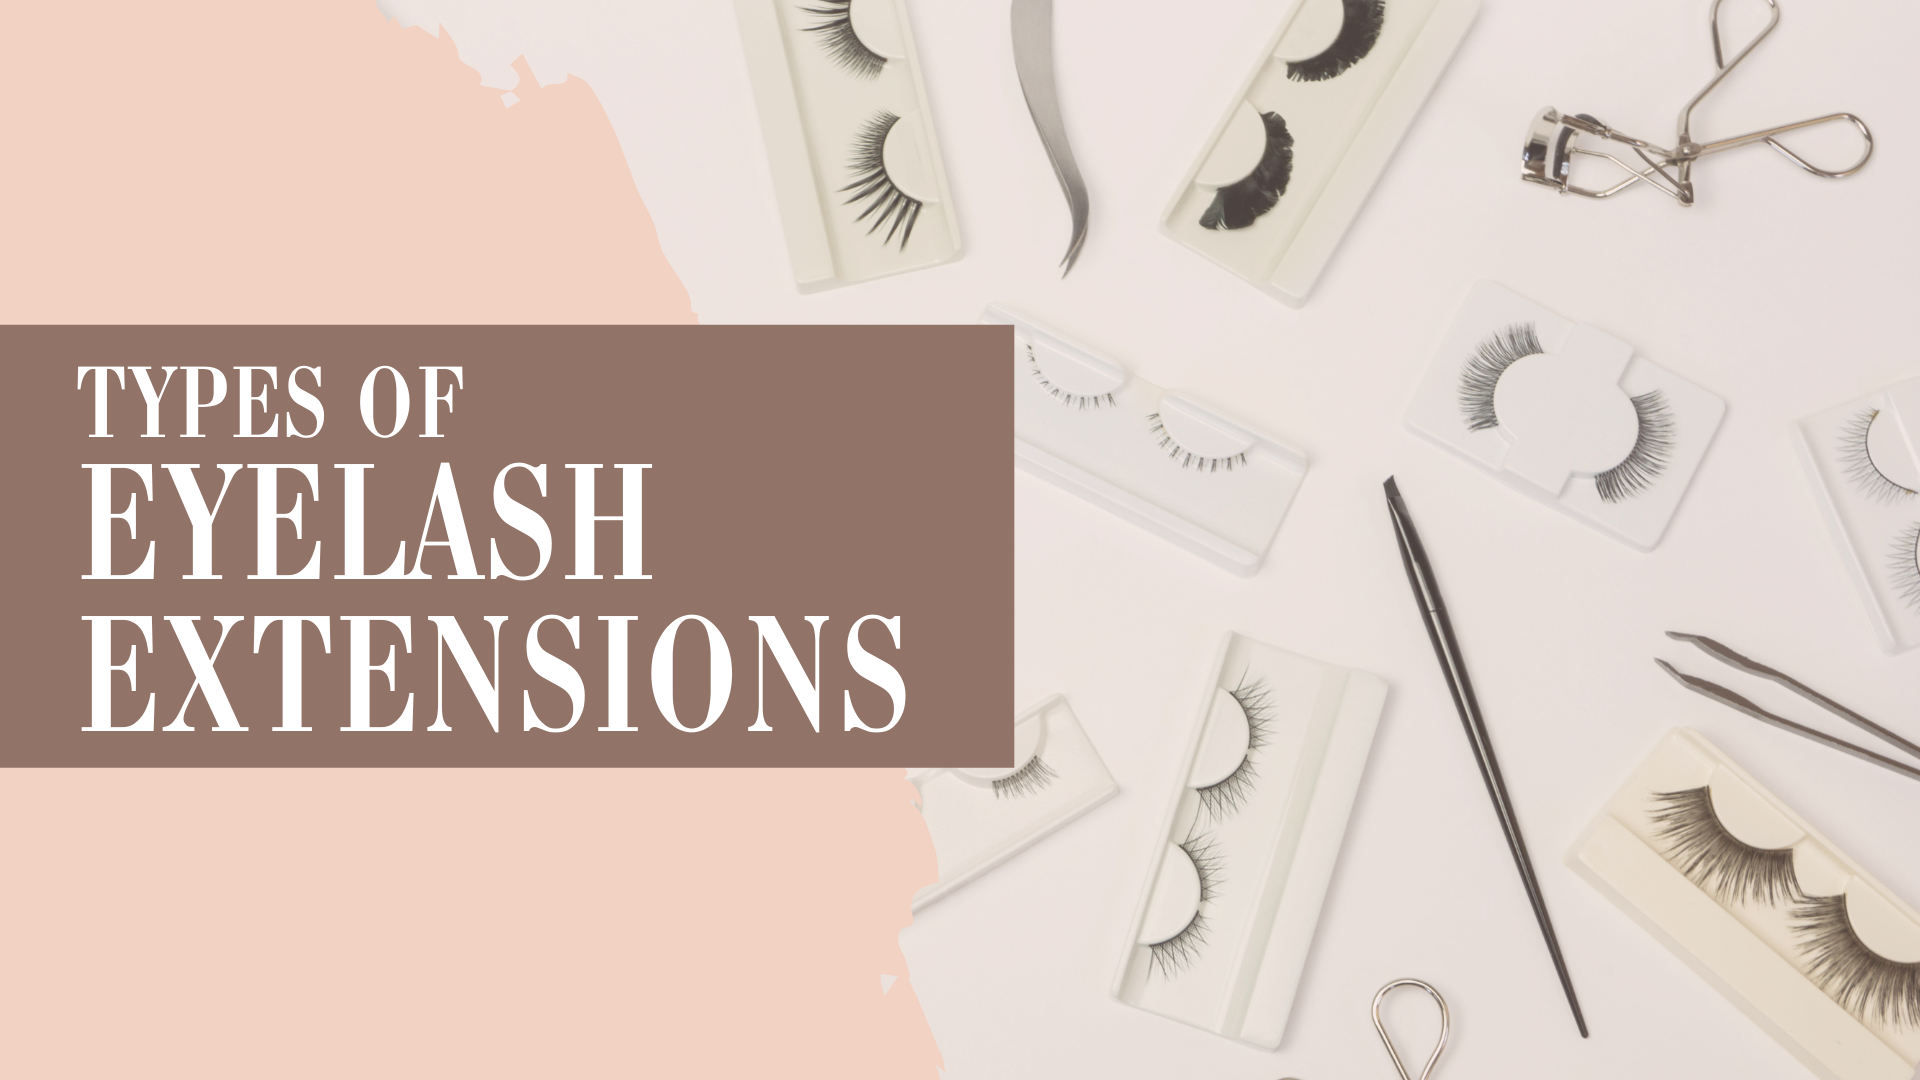 NJ Lash Studio Explains the Different Types of Eyelash Extensions